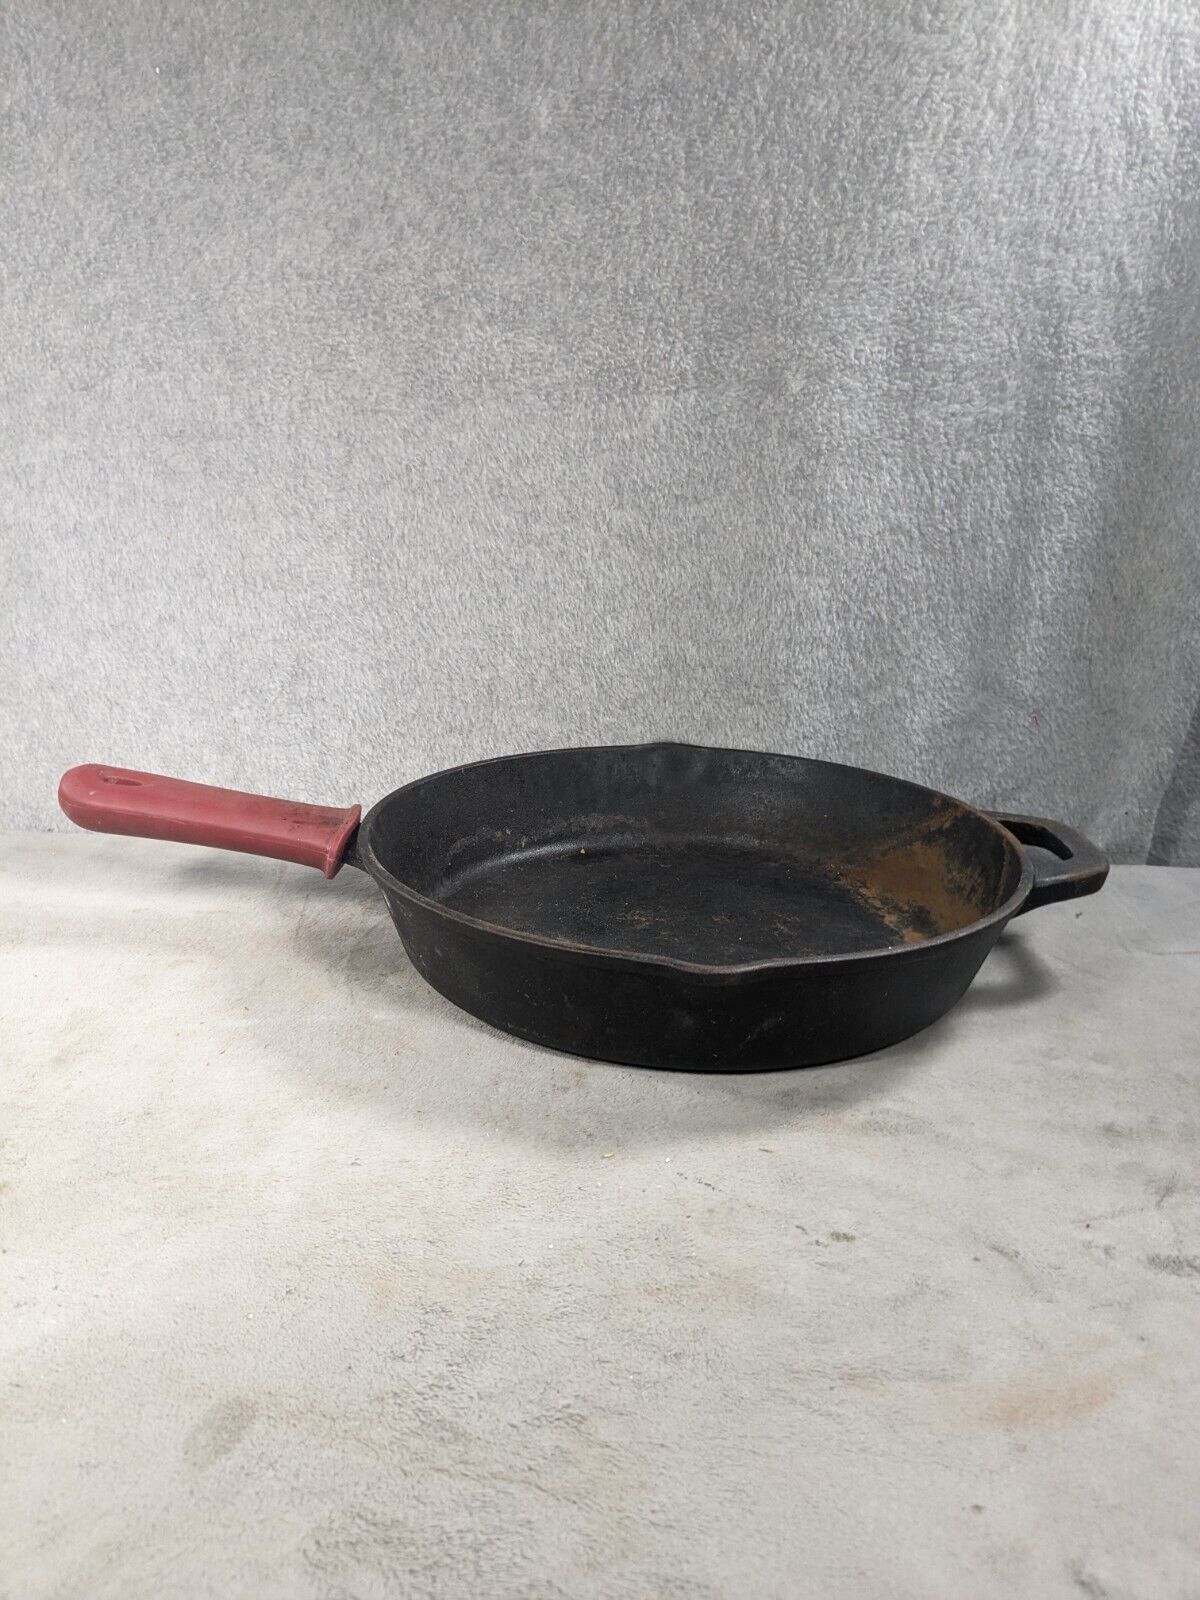 Heavy TRAMONTINA 12 inch Cast Iron Skillet Deep Frying Pan Cookware - Needs Work